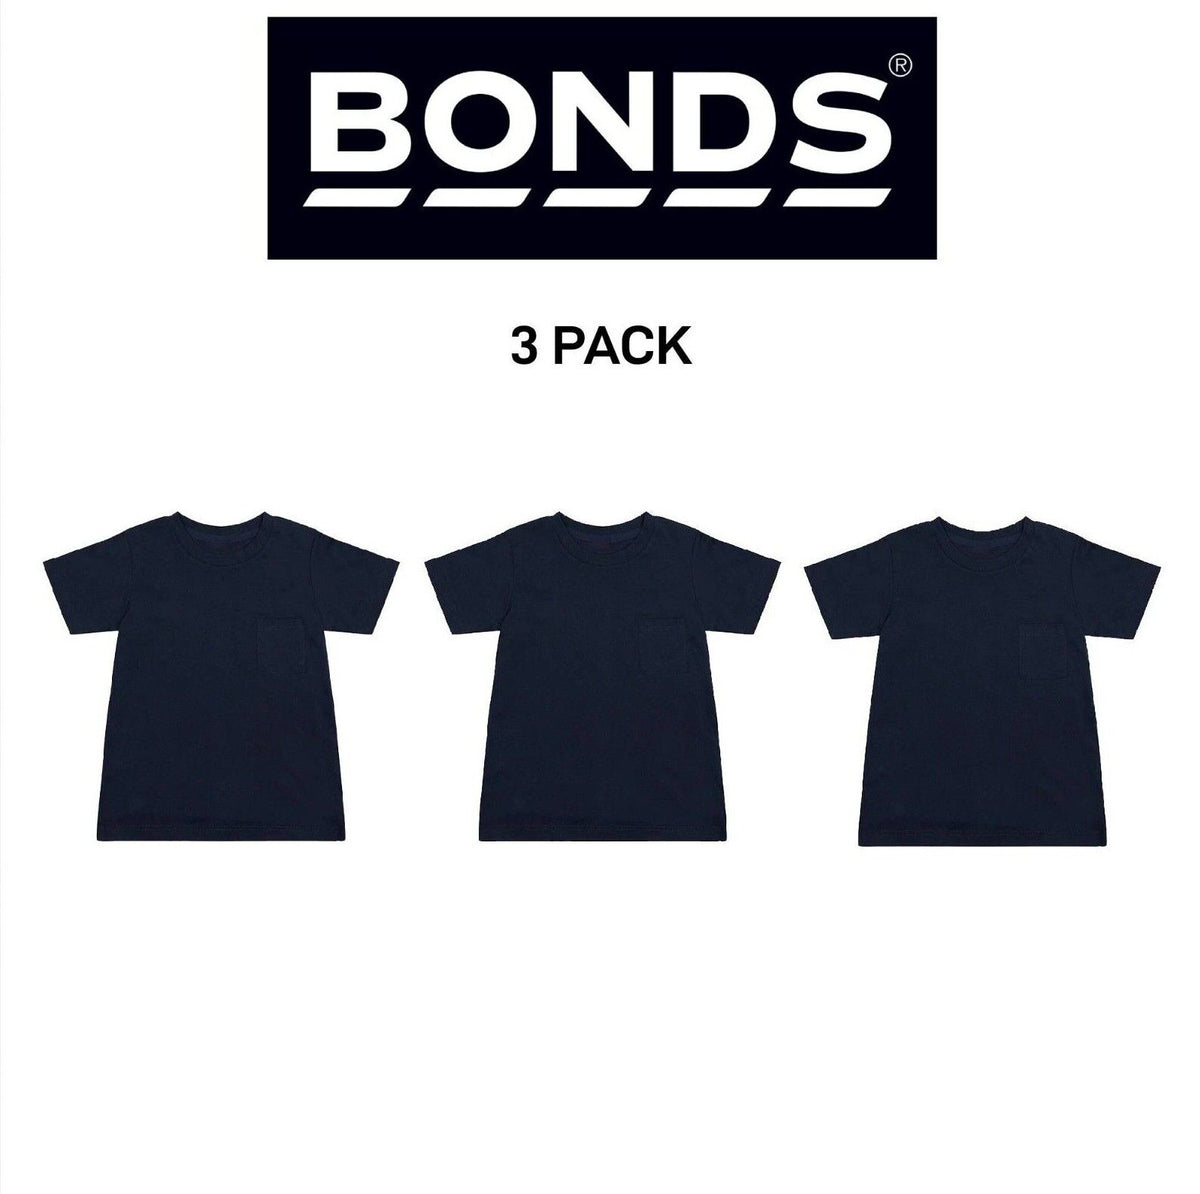 Bonds Kids Next Gen Crew Tee Cotton Shirt Perfect Comfort and Style 3 Pack KVRHK